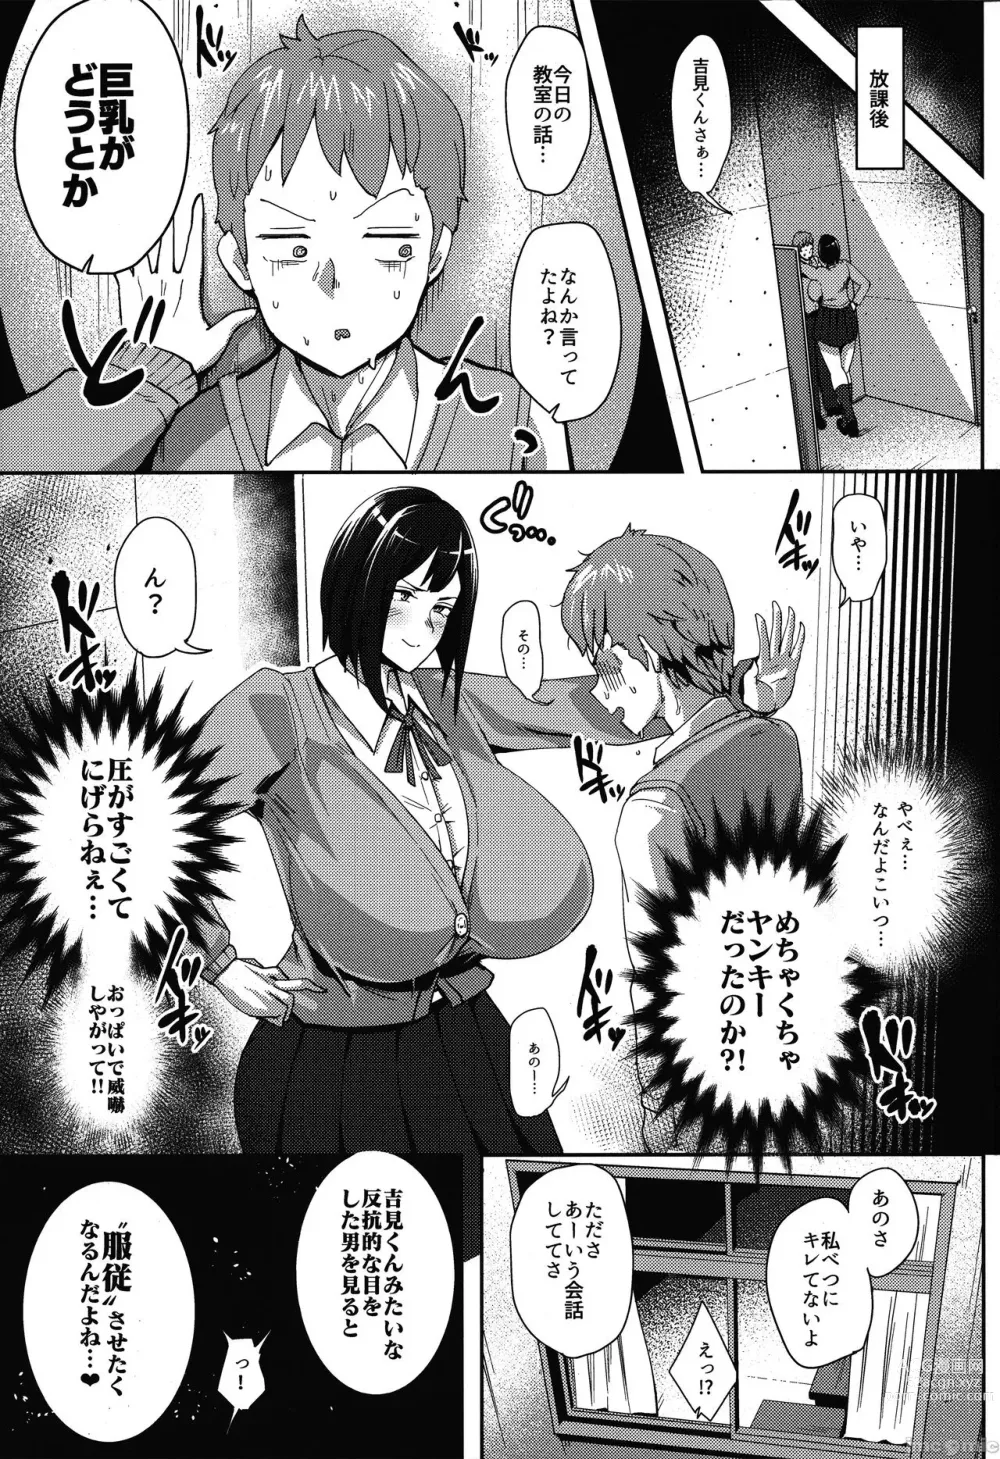 Page 4 of manga Minami-san Sensational